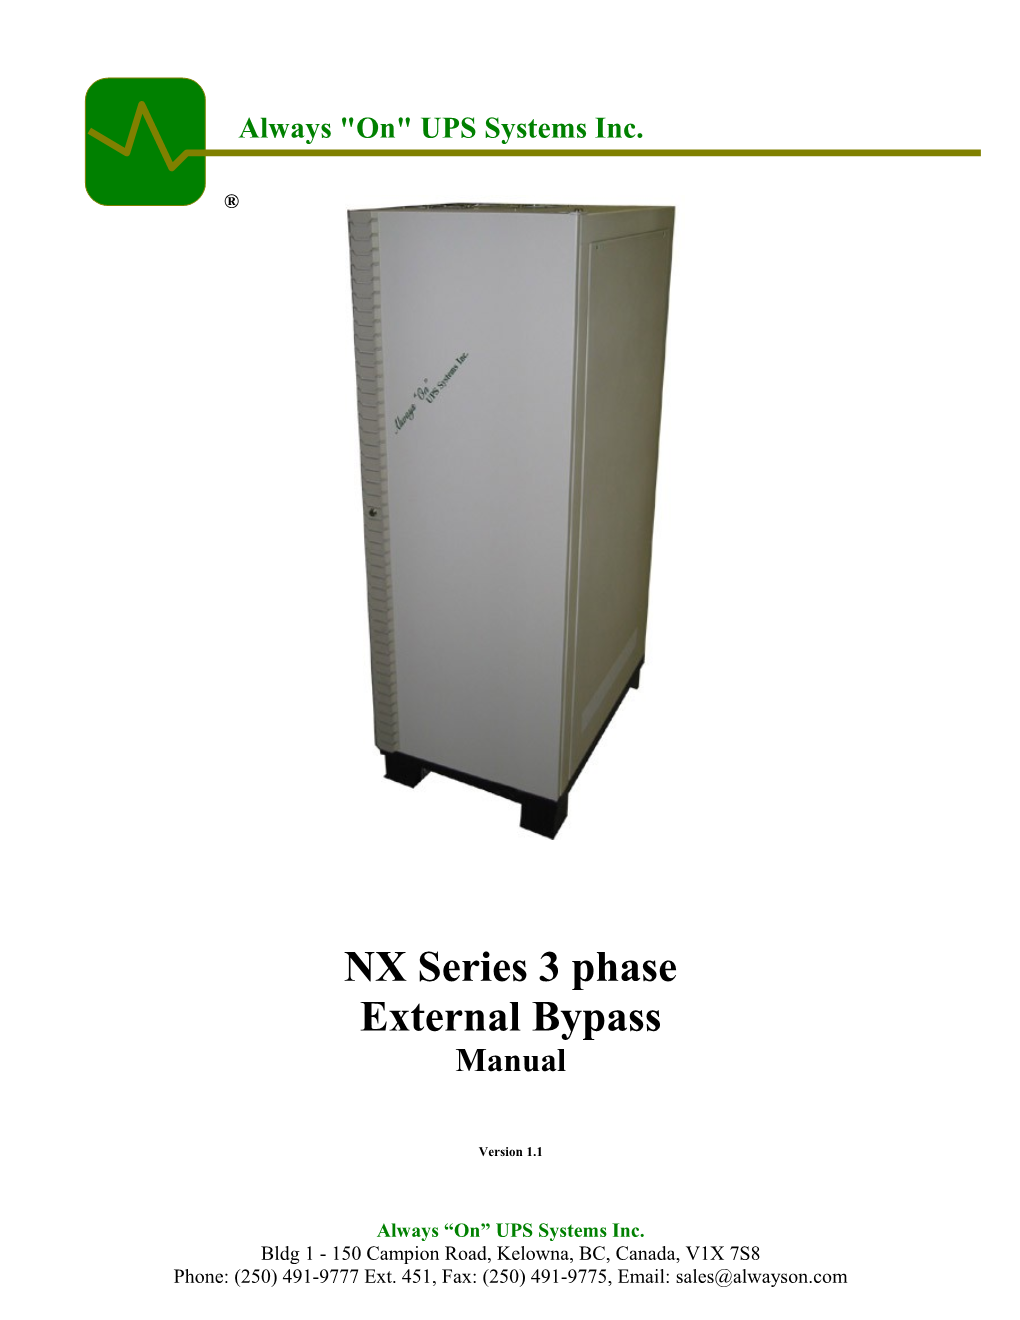 NX Series 3 Phase